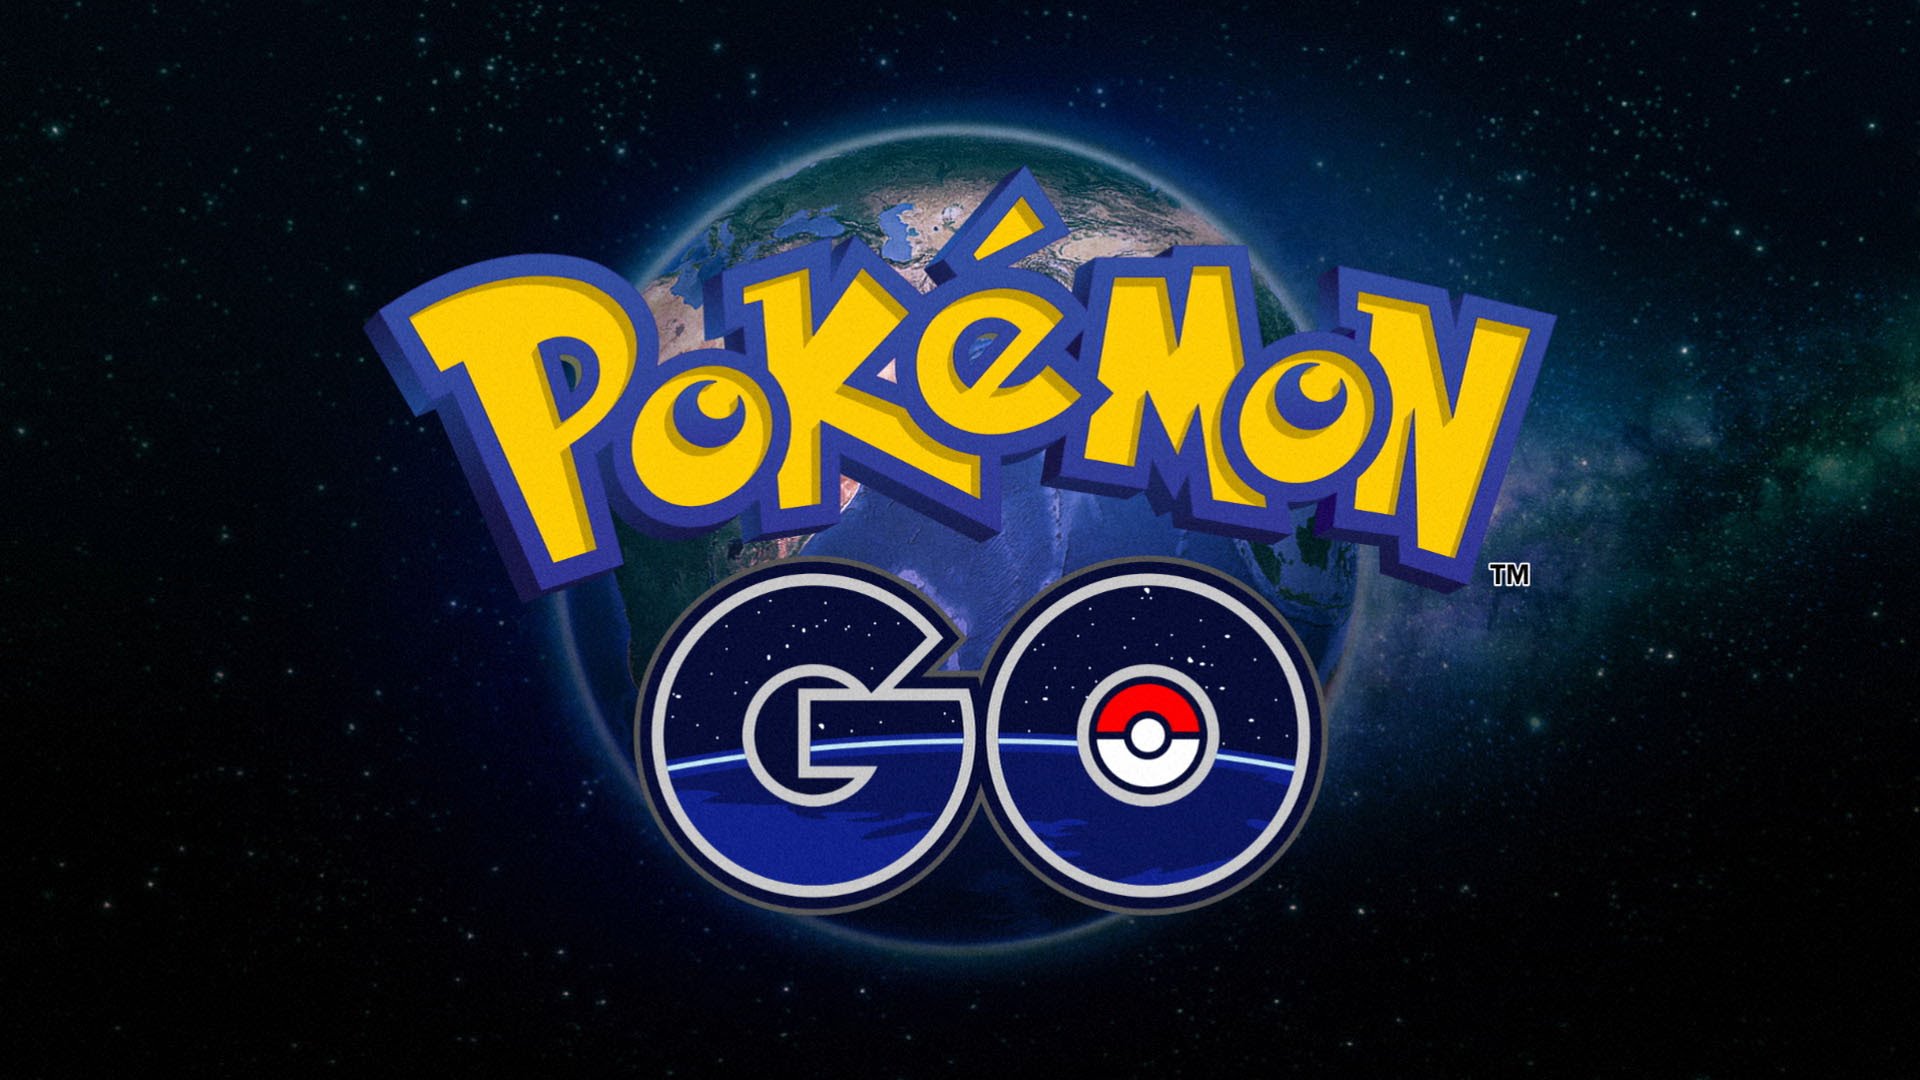 Pokémon GO ประกาศรายชื่อประเทศที่จะได้ท่องเที่ยวจับโปเกม่อนอีก 3 ประเทศ!!